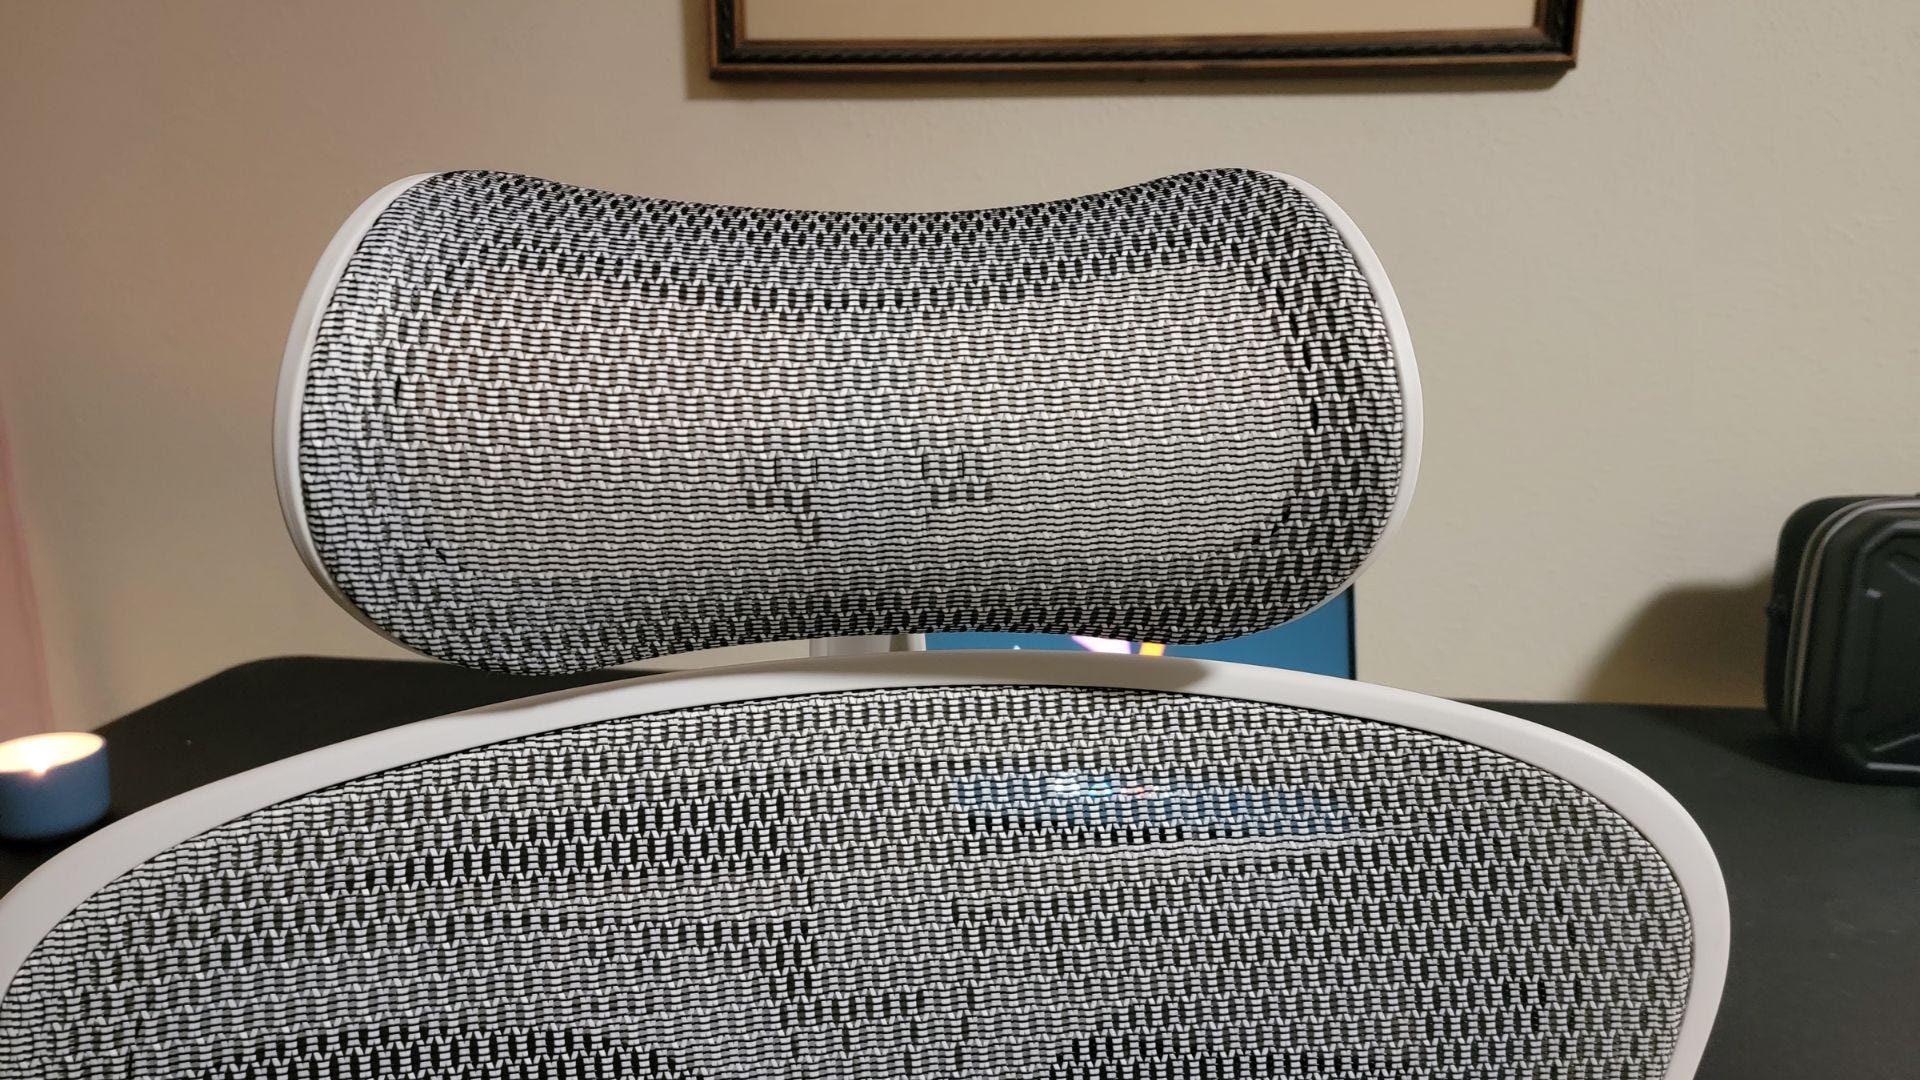 Front view of SIHOO Doro-C300 Ergonomic Chair headrest